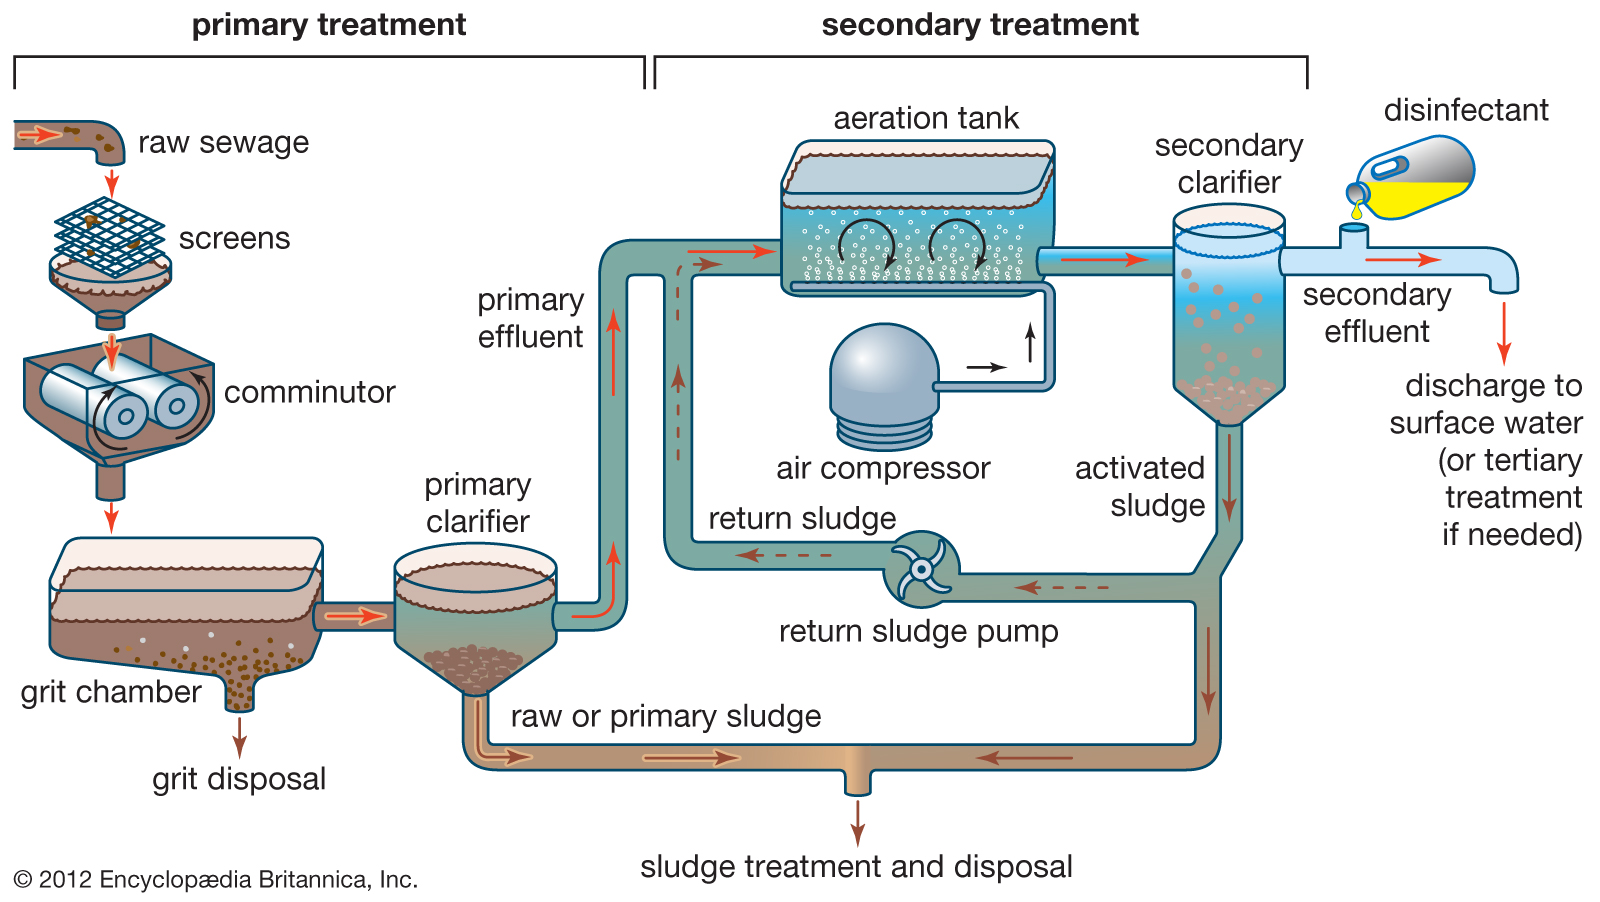 Sewage Treatment Plants